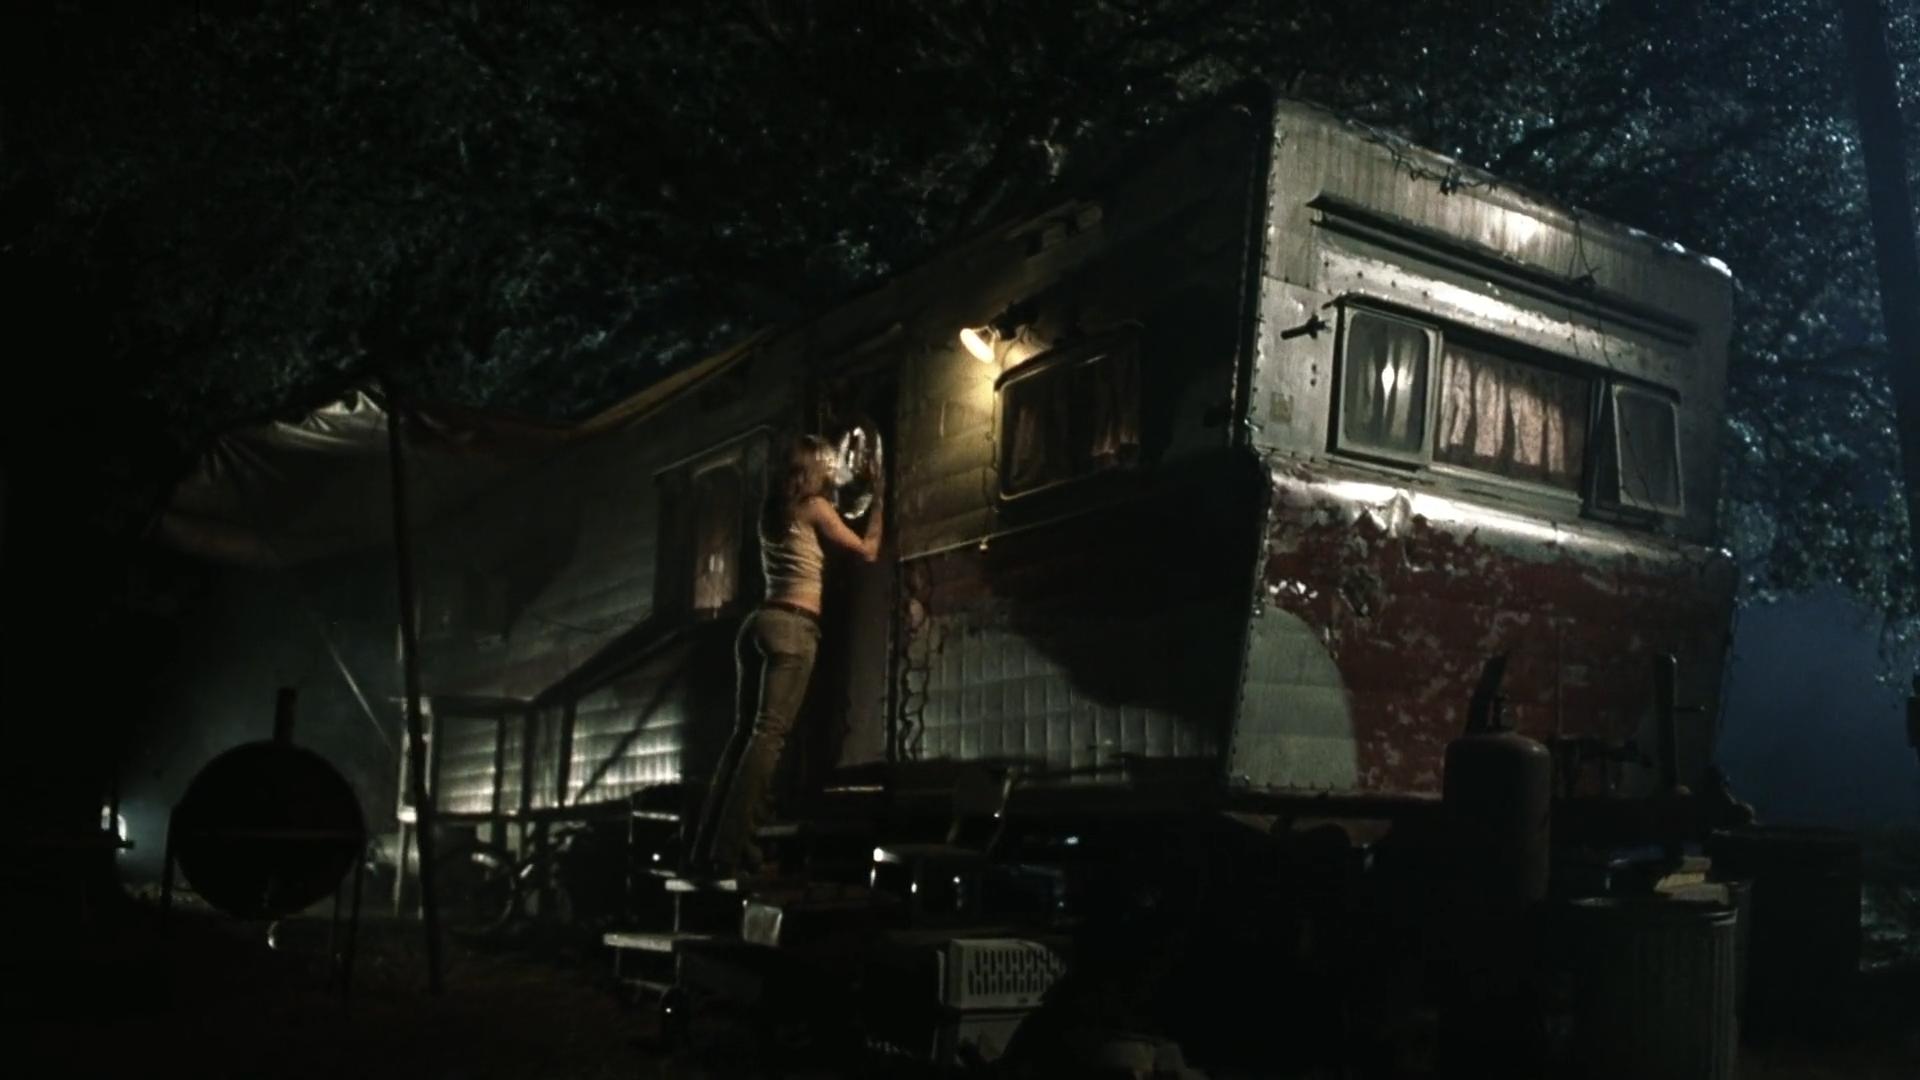 Michael Bay S Texas Chainsaw Massacre Streaming Filme Bei Cinemaxxl De